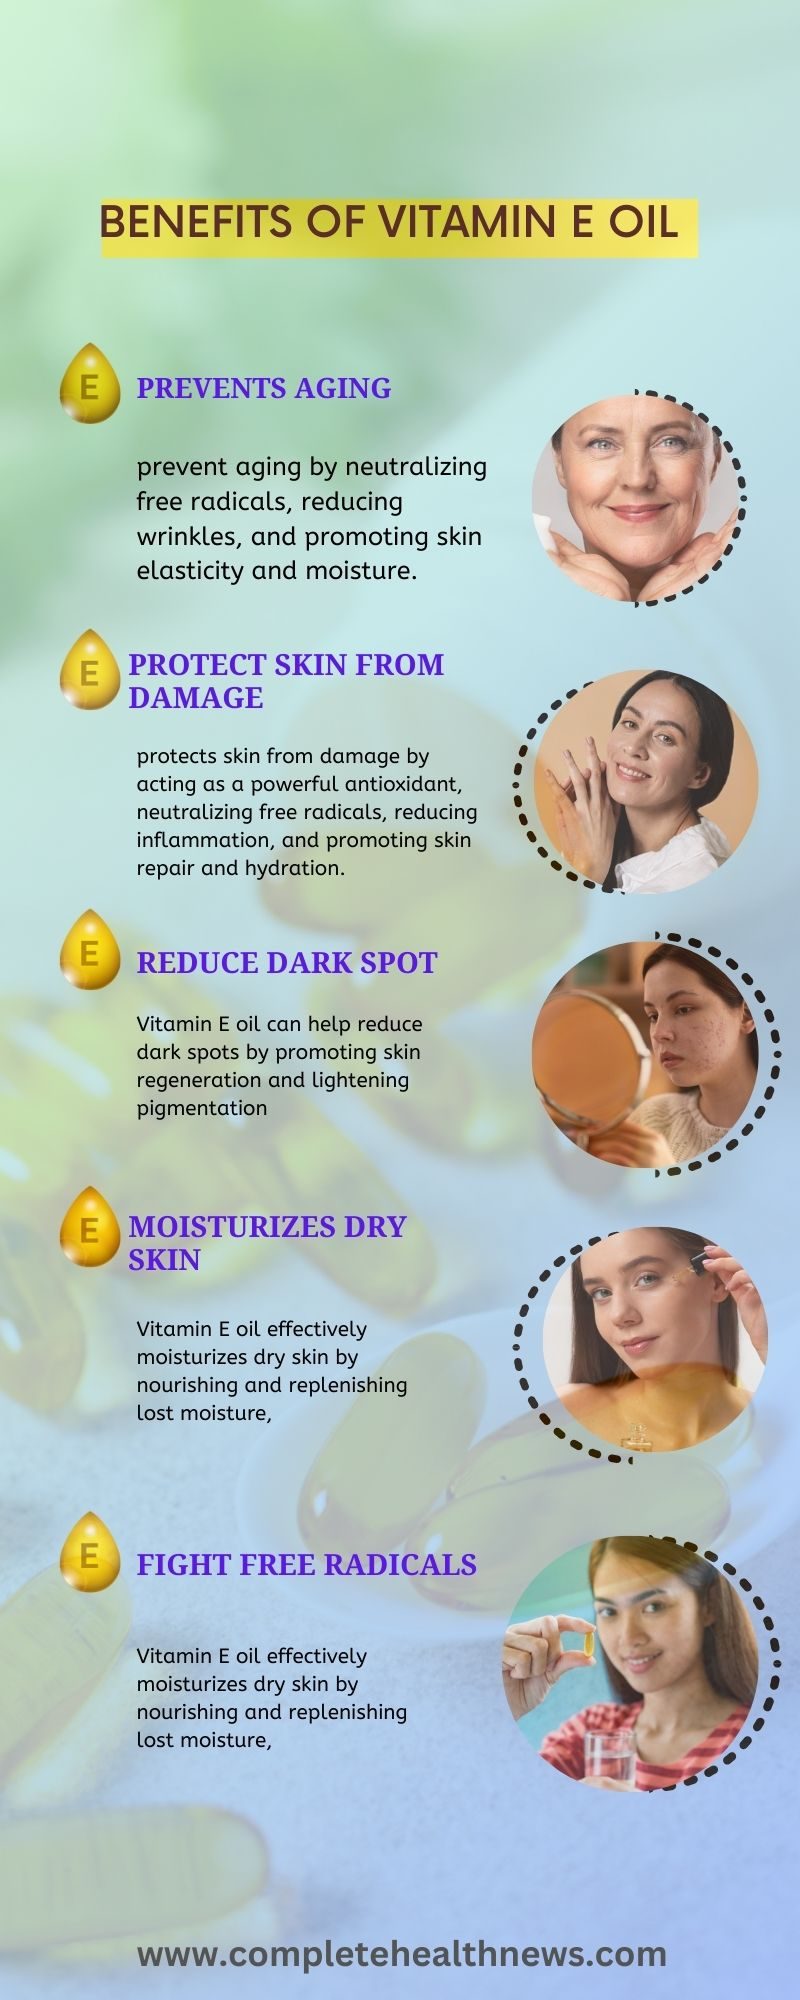 Benefits of vitamin E oil